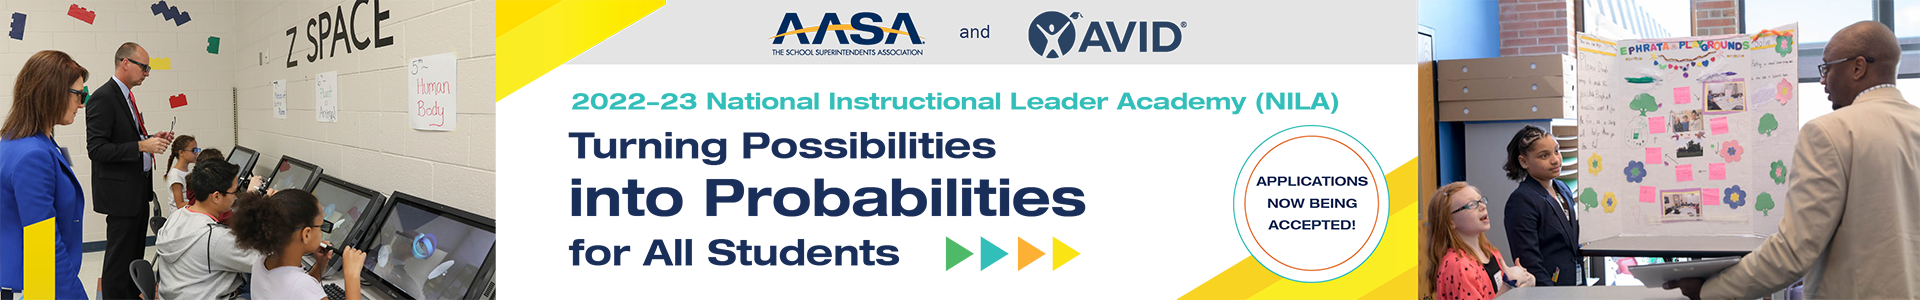 National Instructional Leader Academy banner image